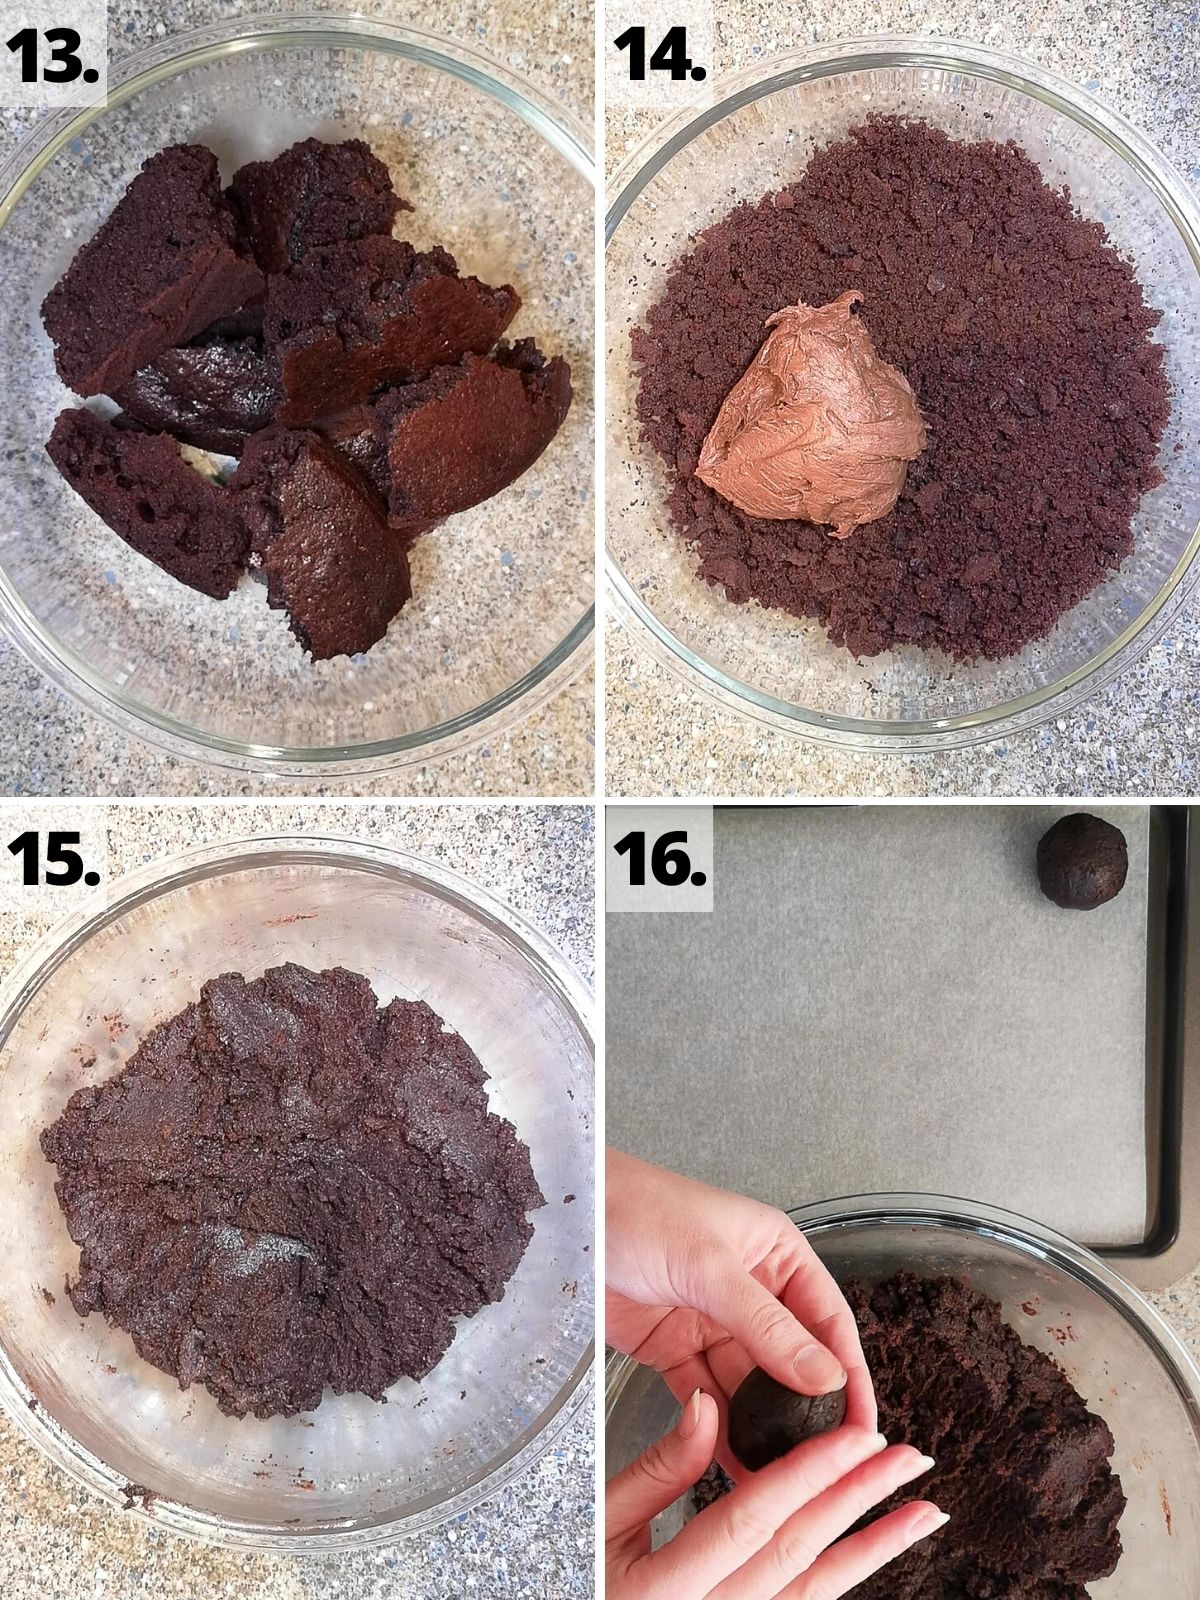 Chocolate cake pops recipe method steps 13 to 16